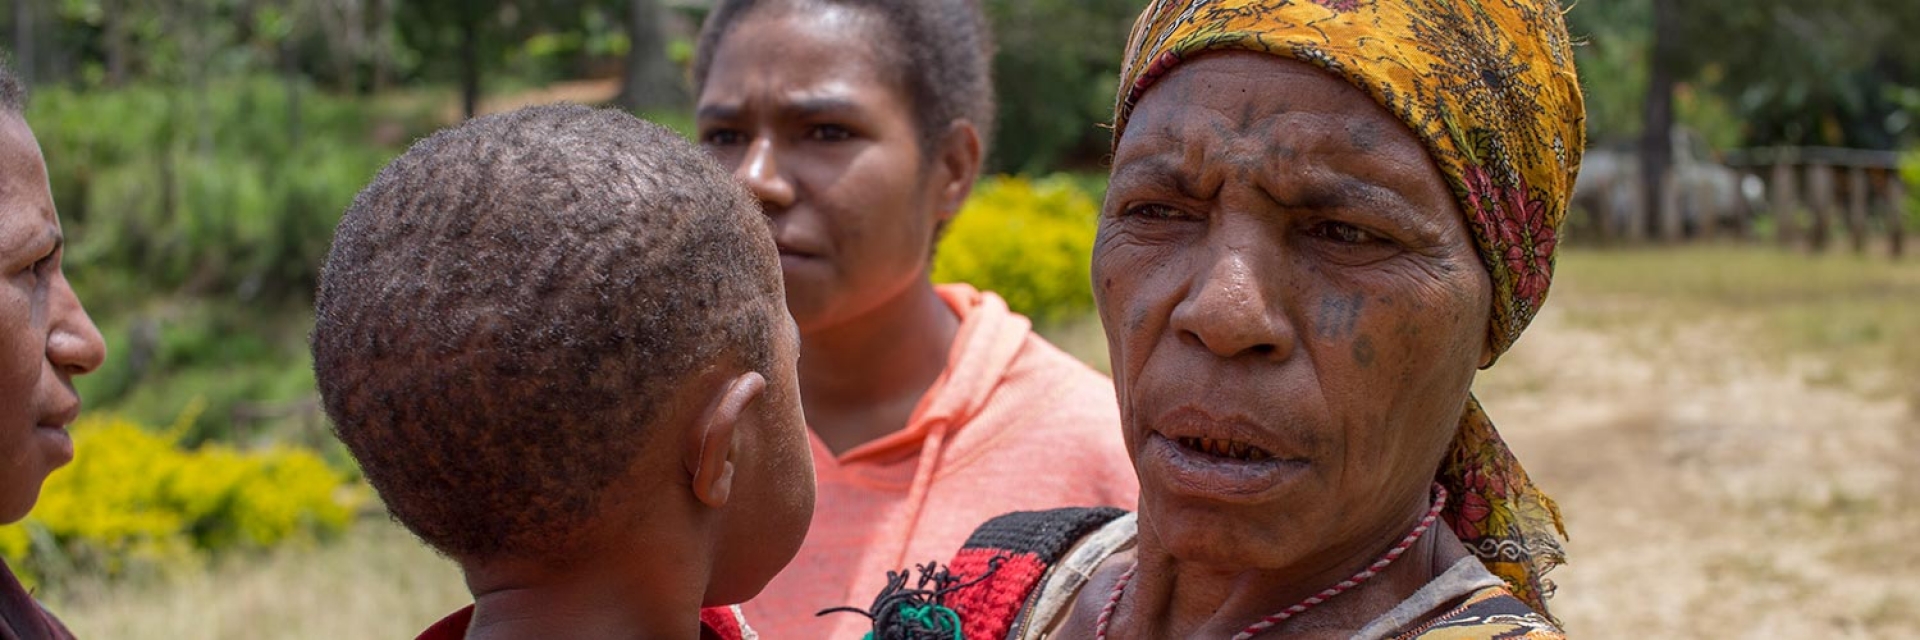 Aid for Papua New Guinea earthquake survivors 2018